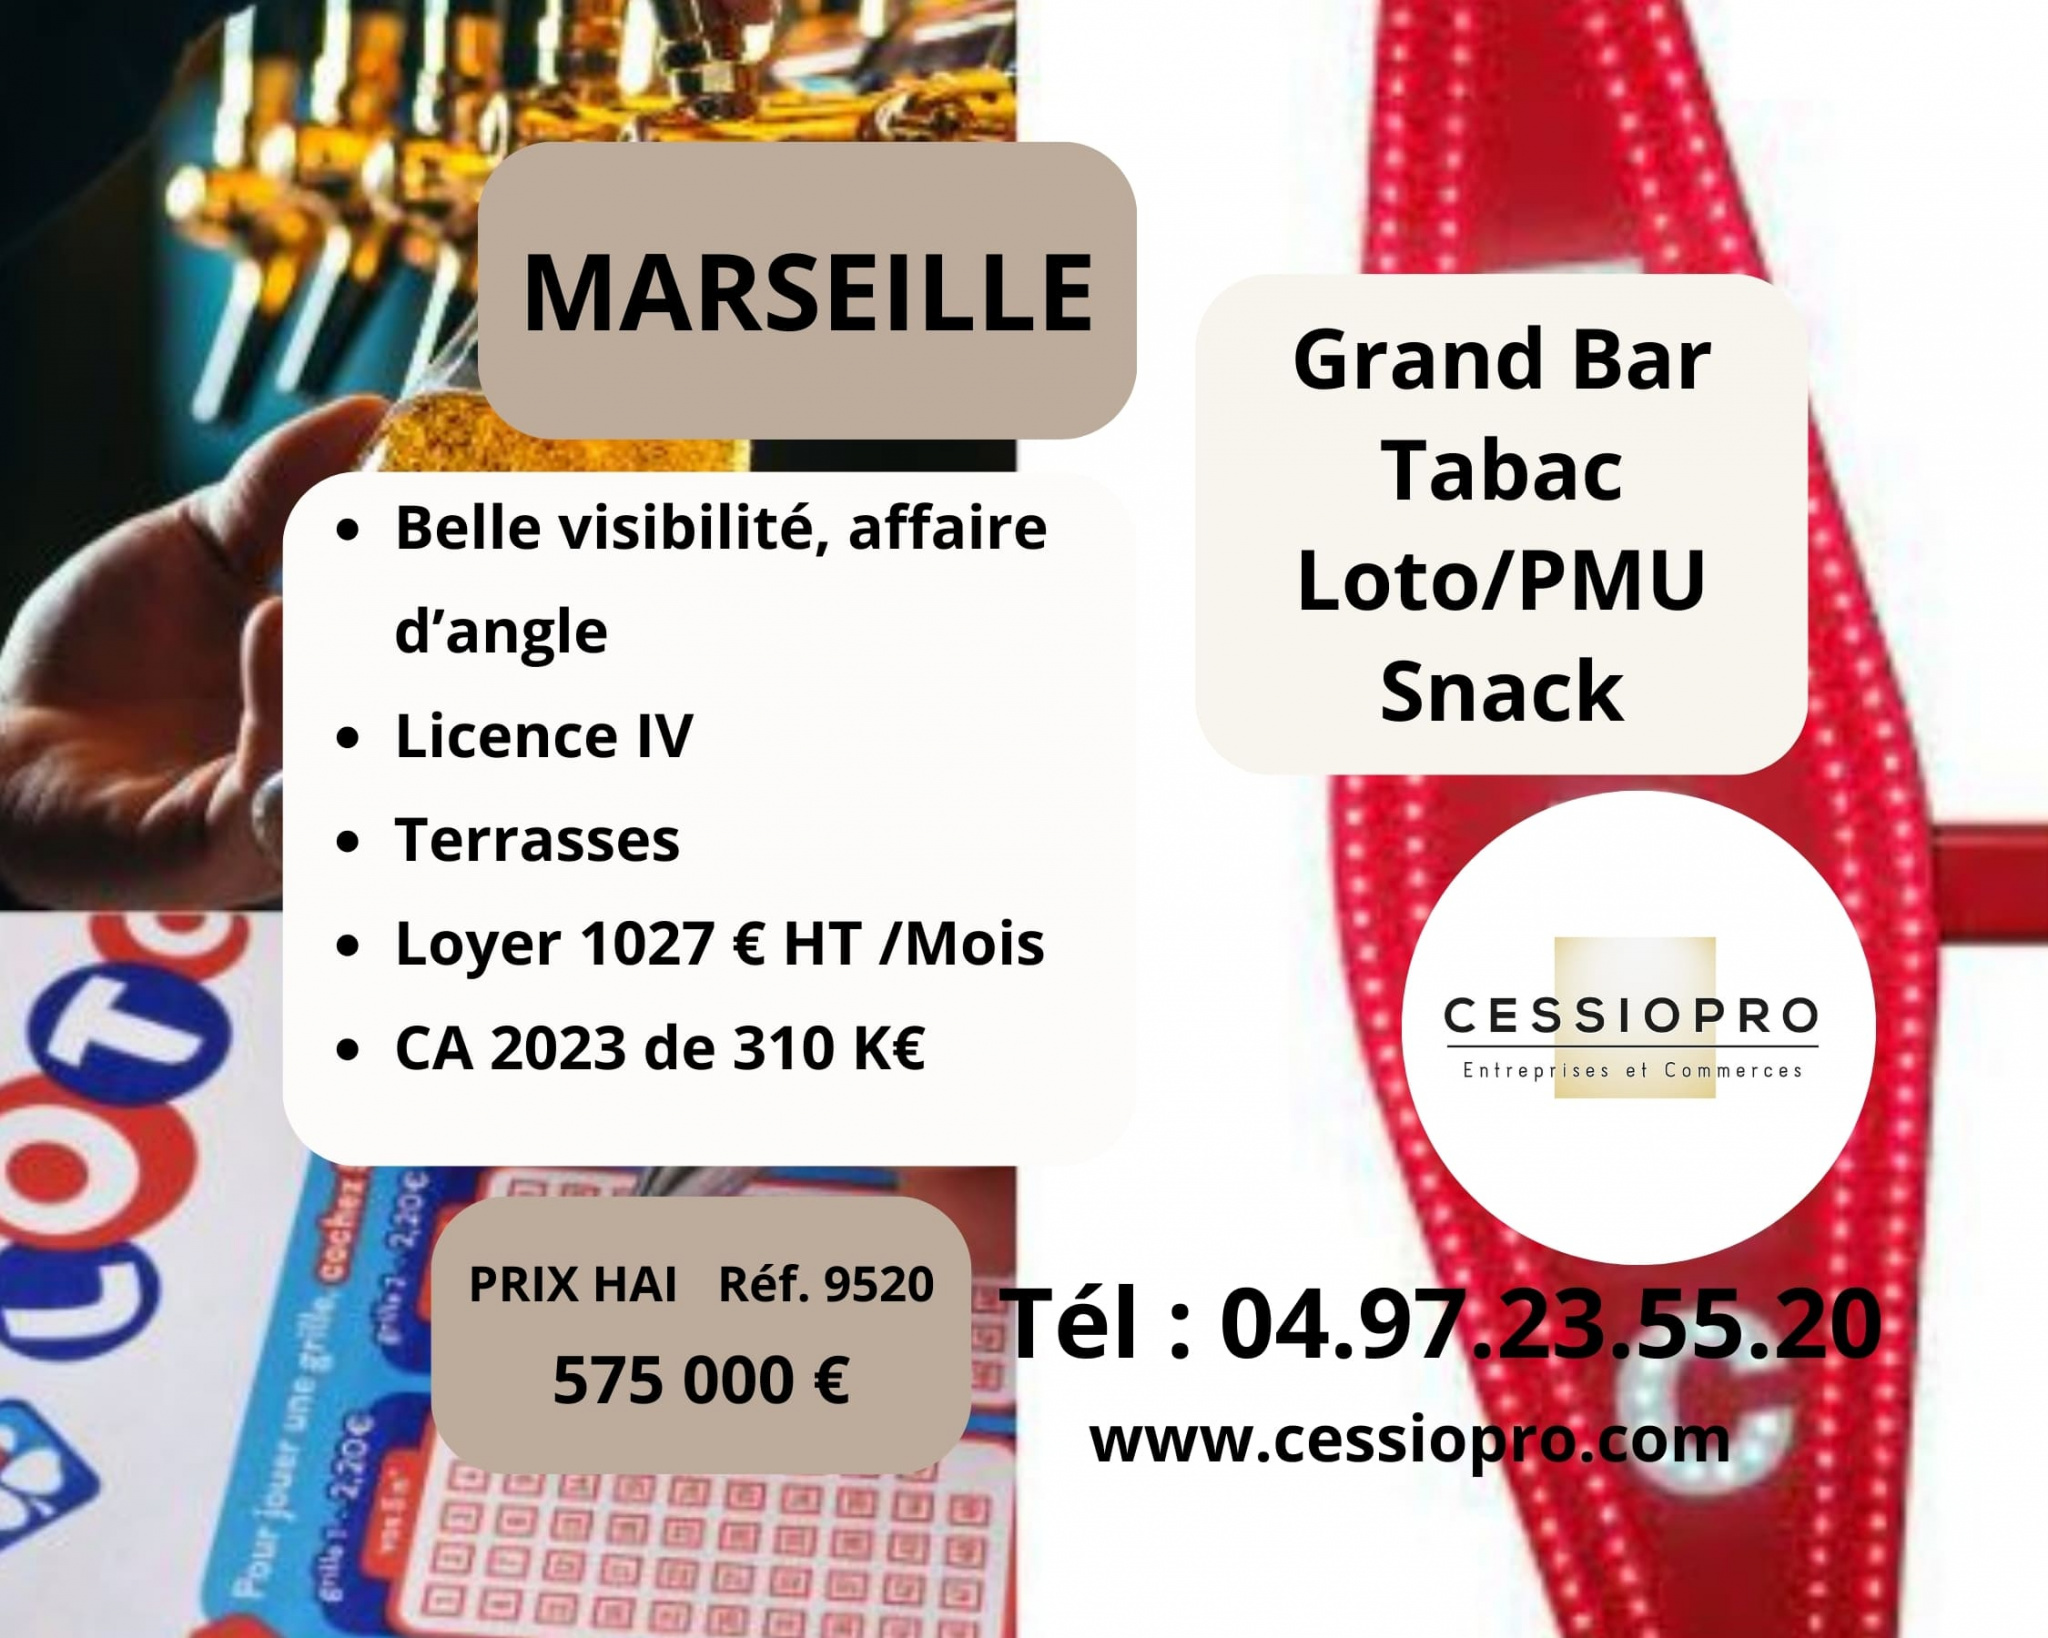 Grand Bar (Licence IV) Tabac Loto PMU + Snack, et Terrasses, à Marseille